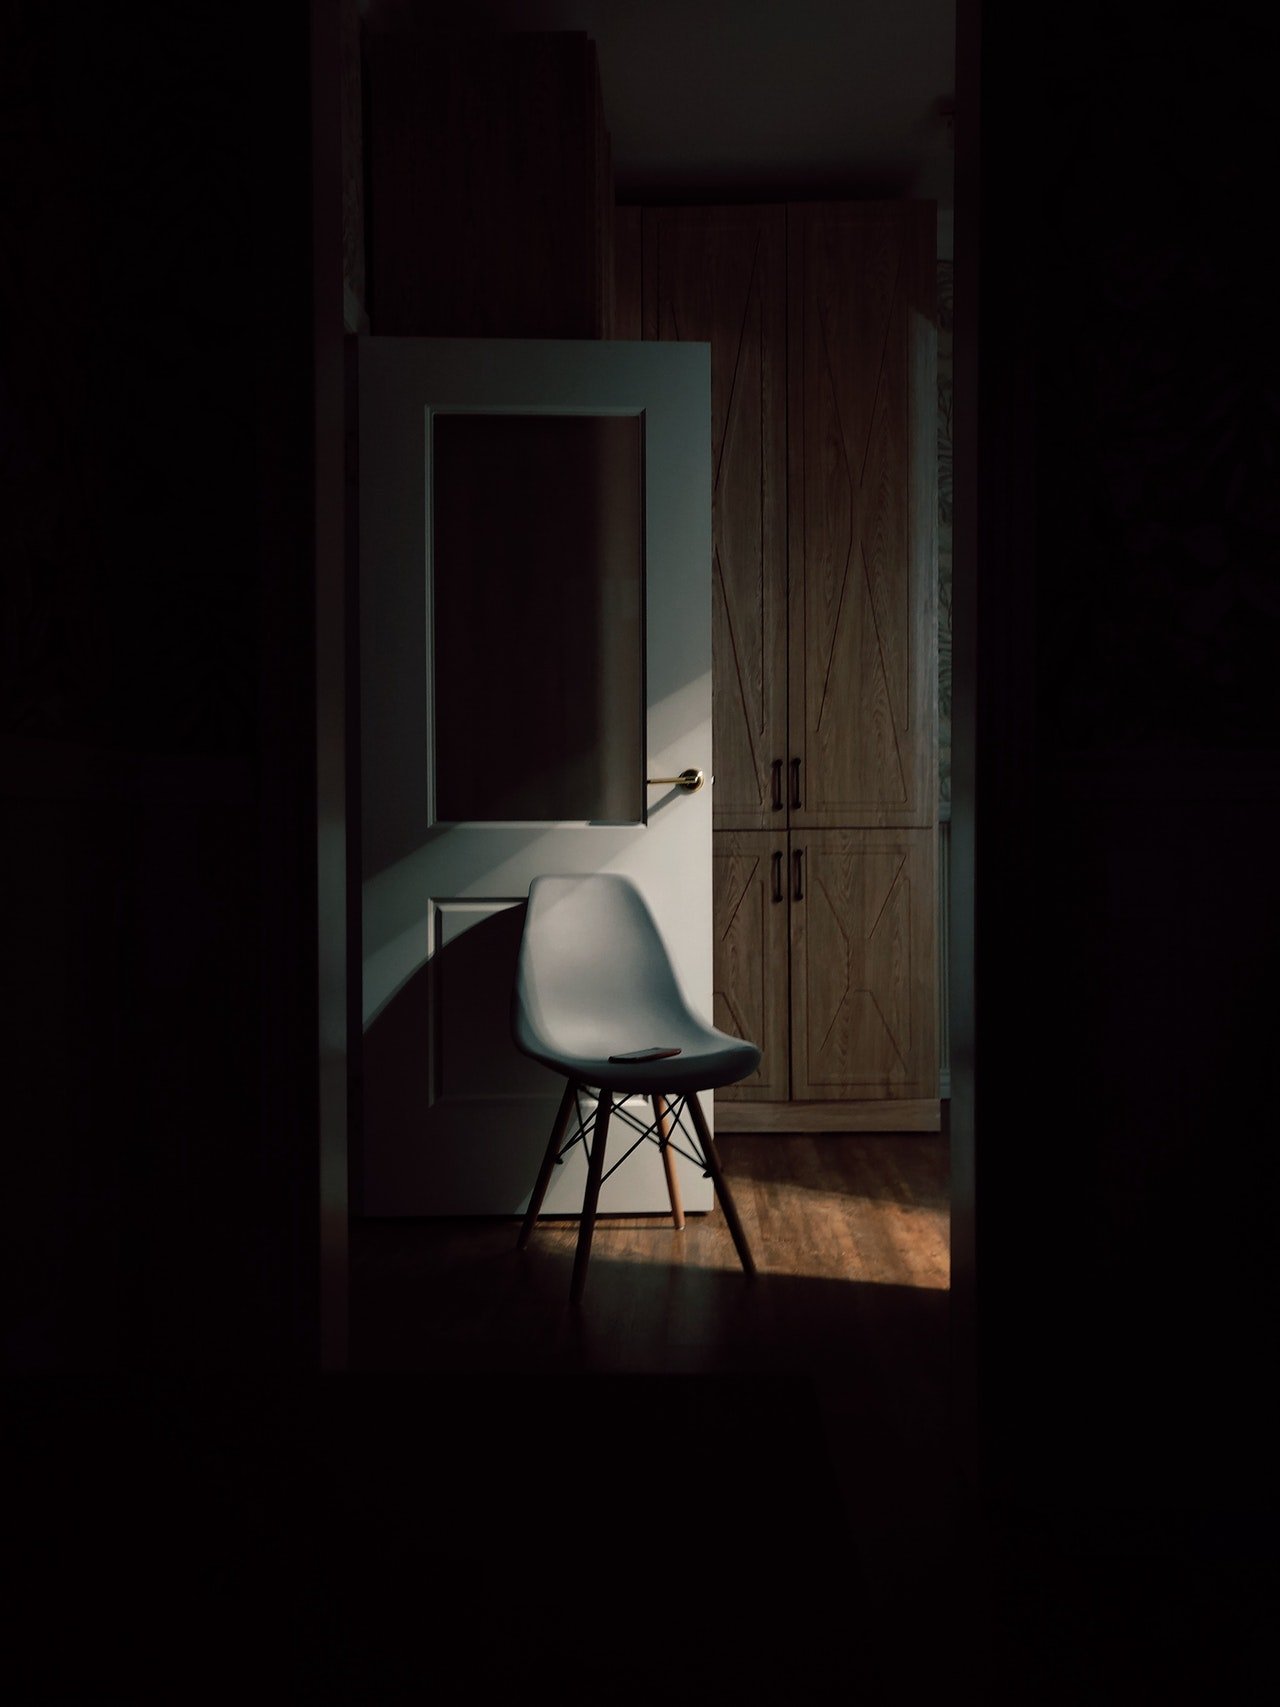 Casa solitaria y oscura. | Foto: Pexels